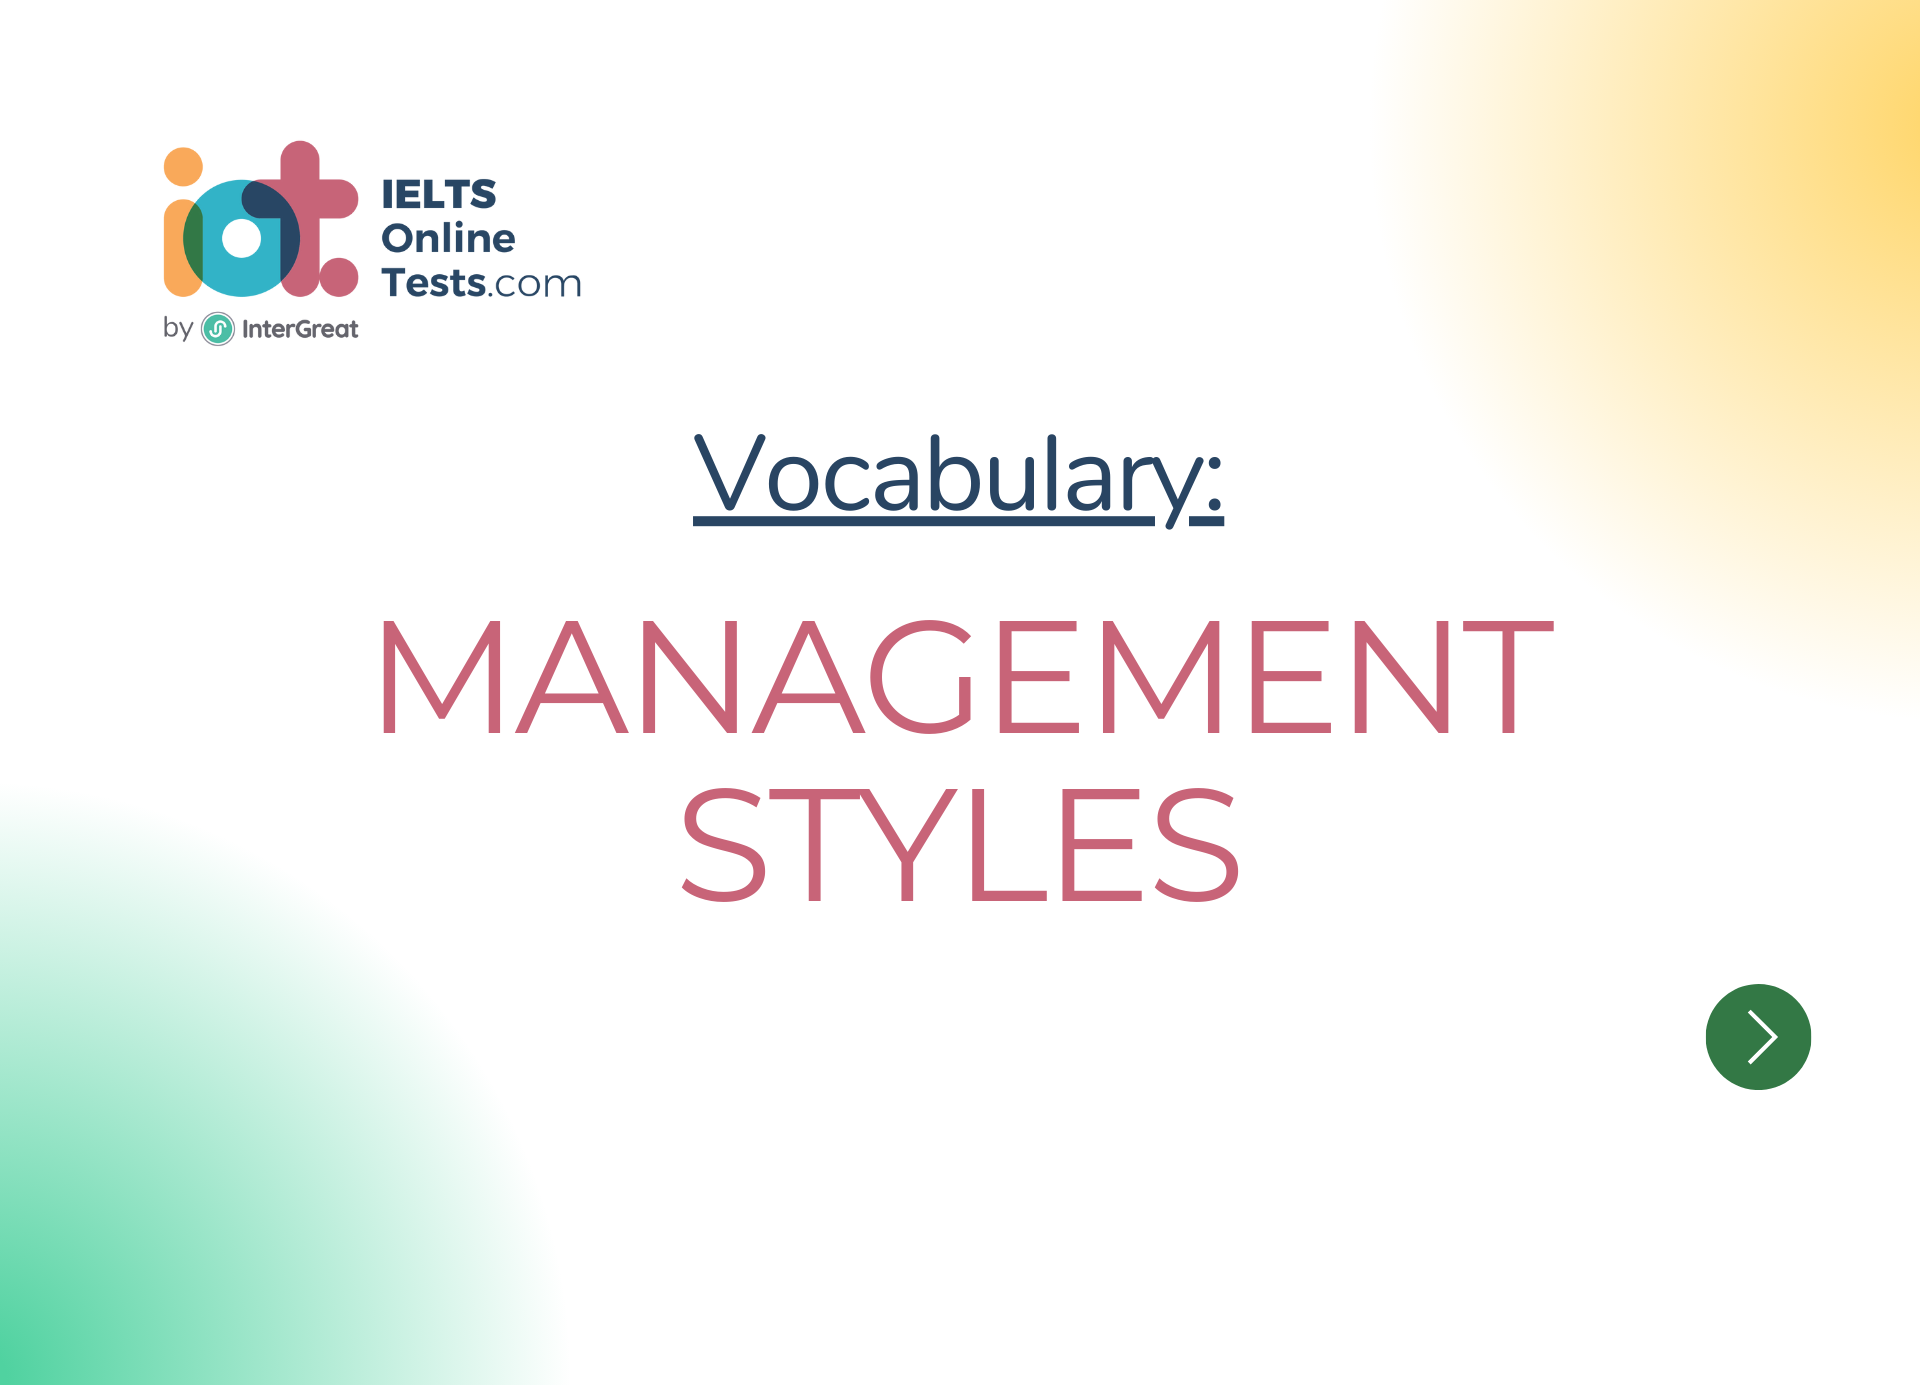 Management styles